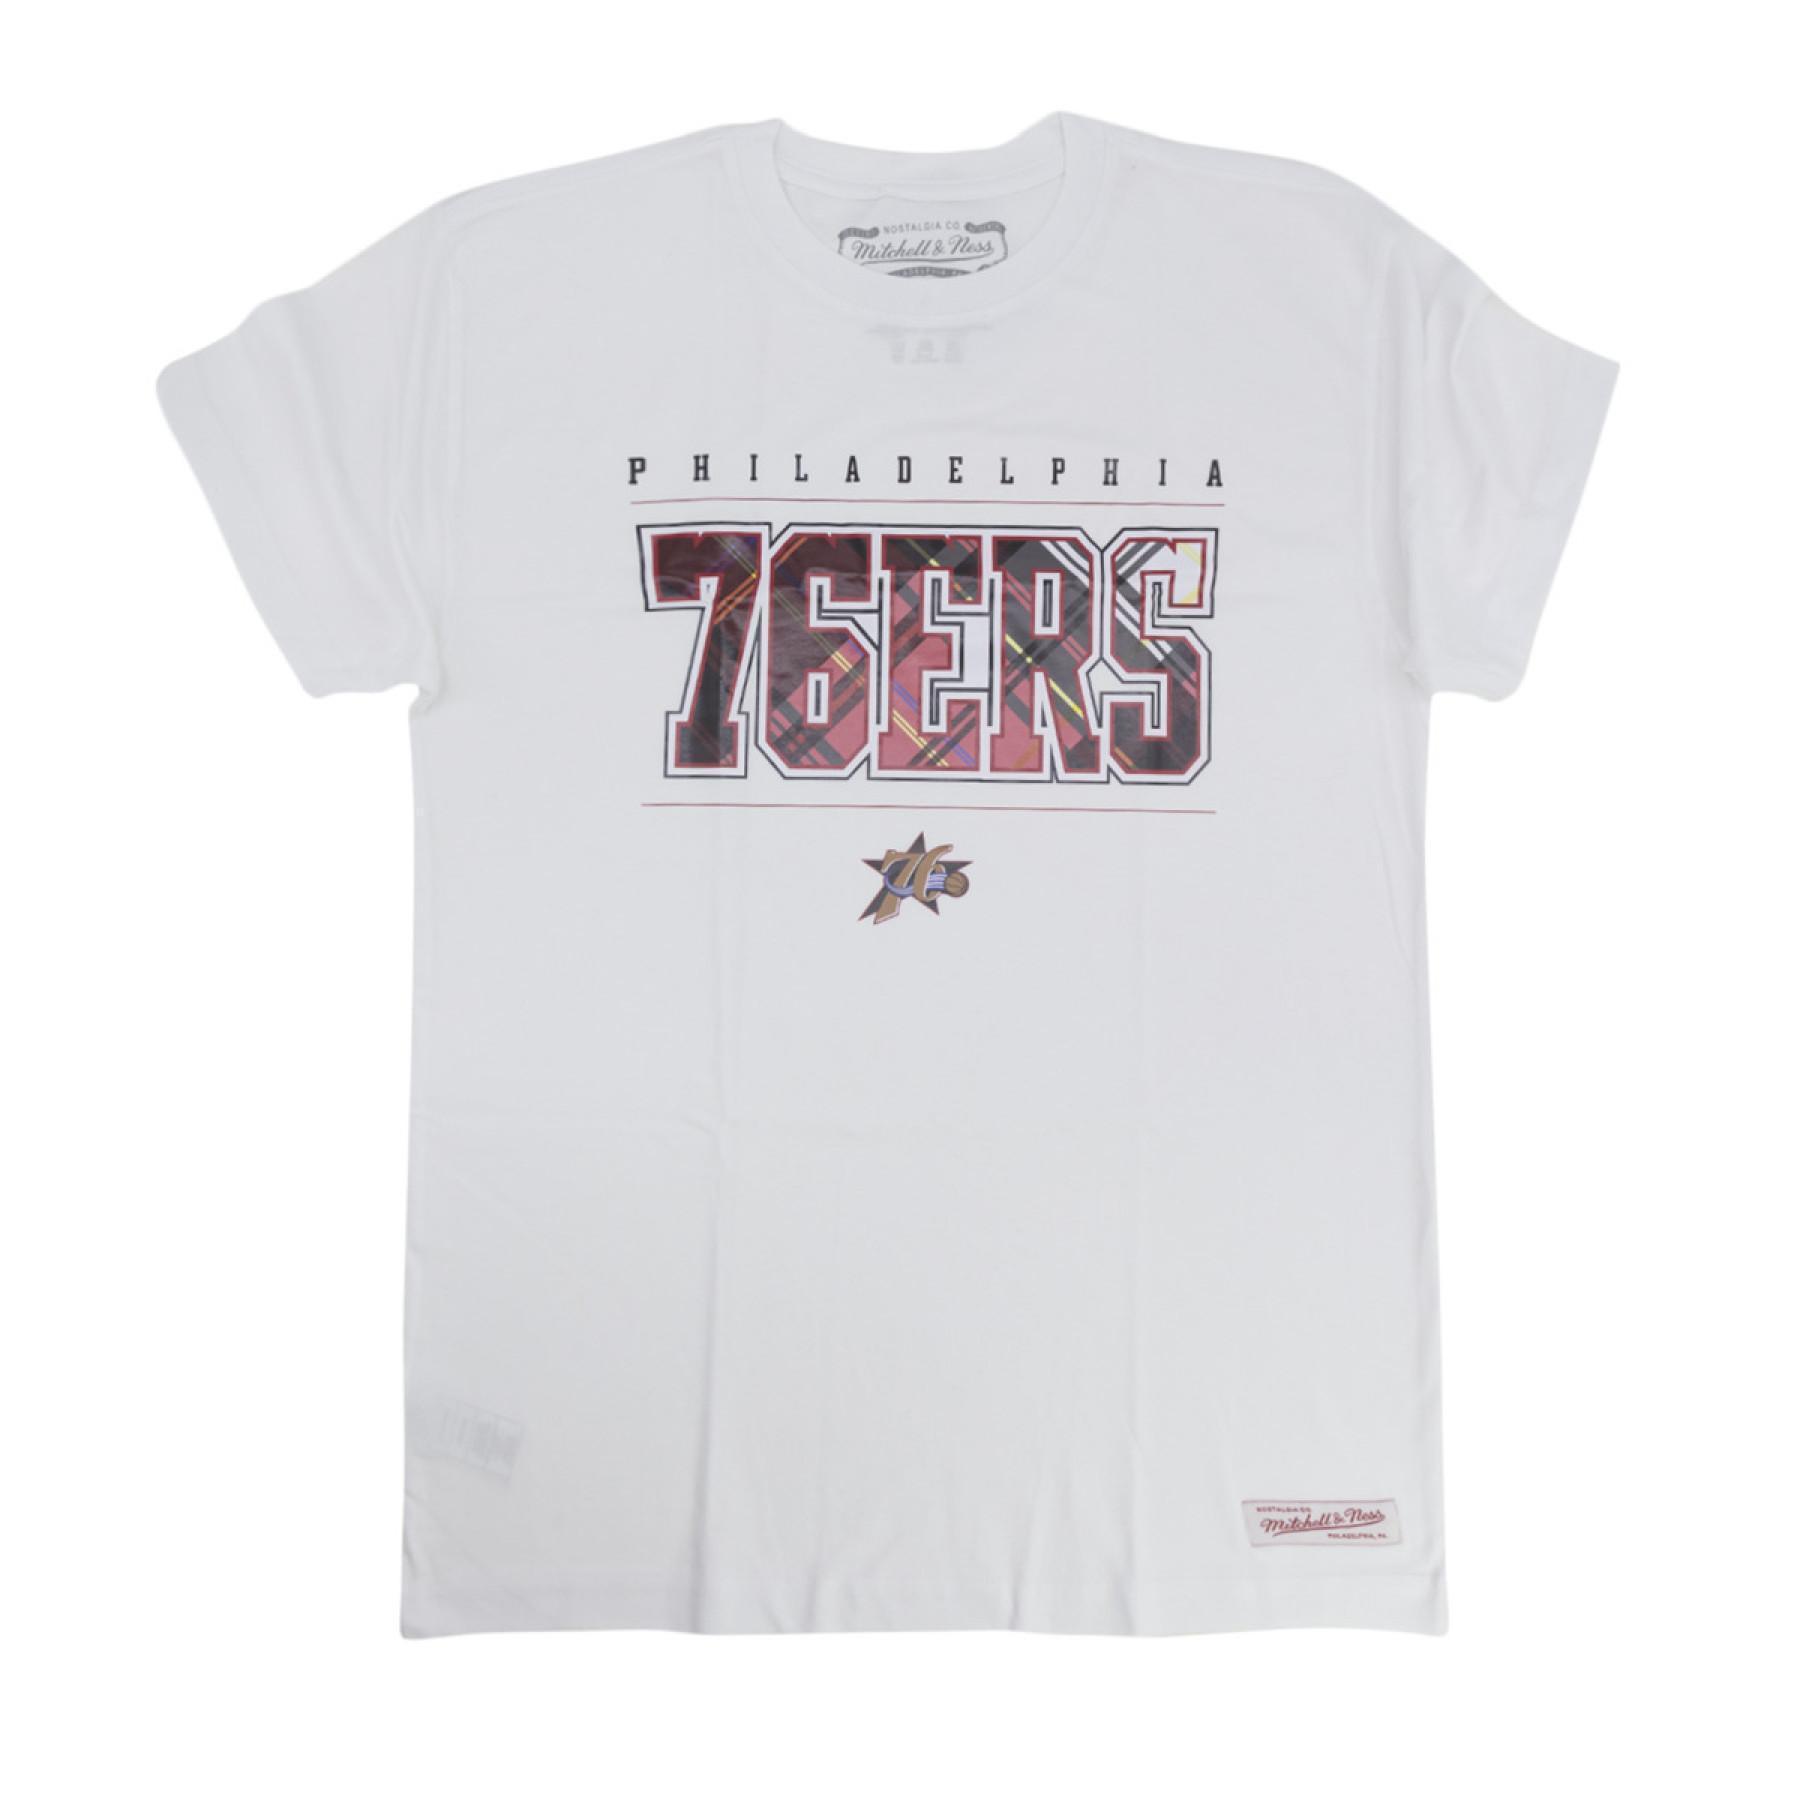 T-shirt Philadelphia 76ers private school team